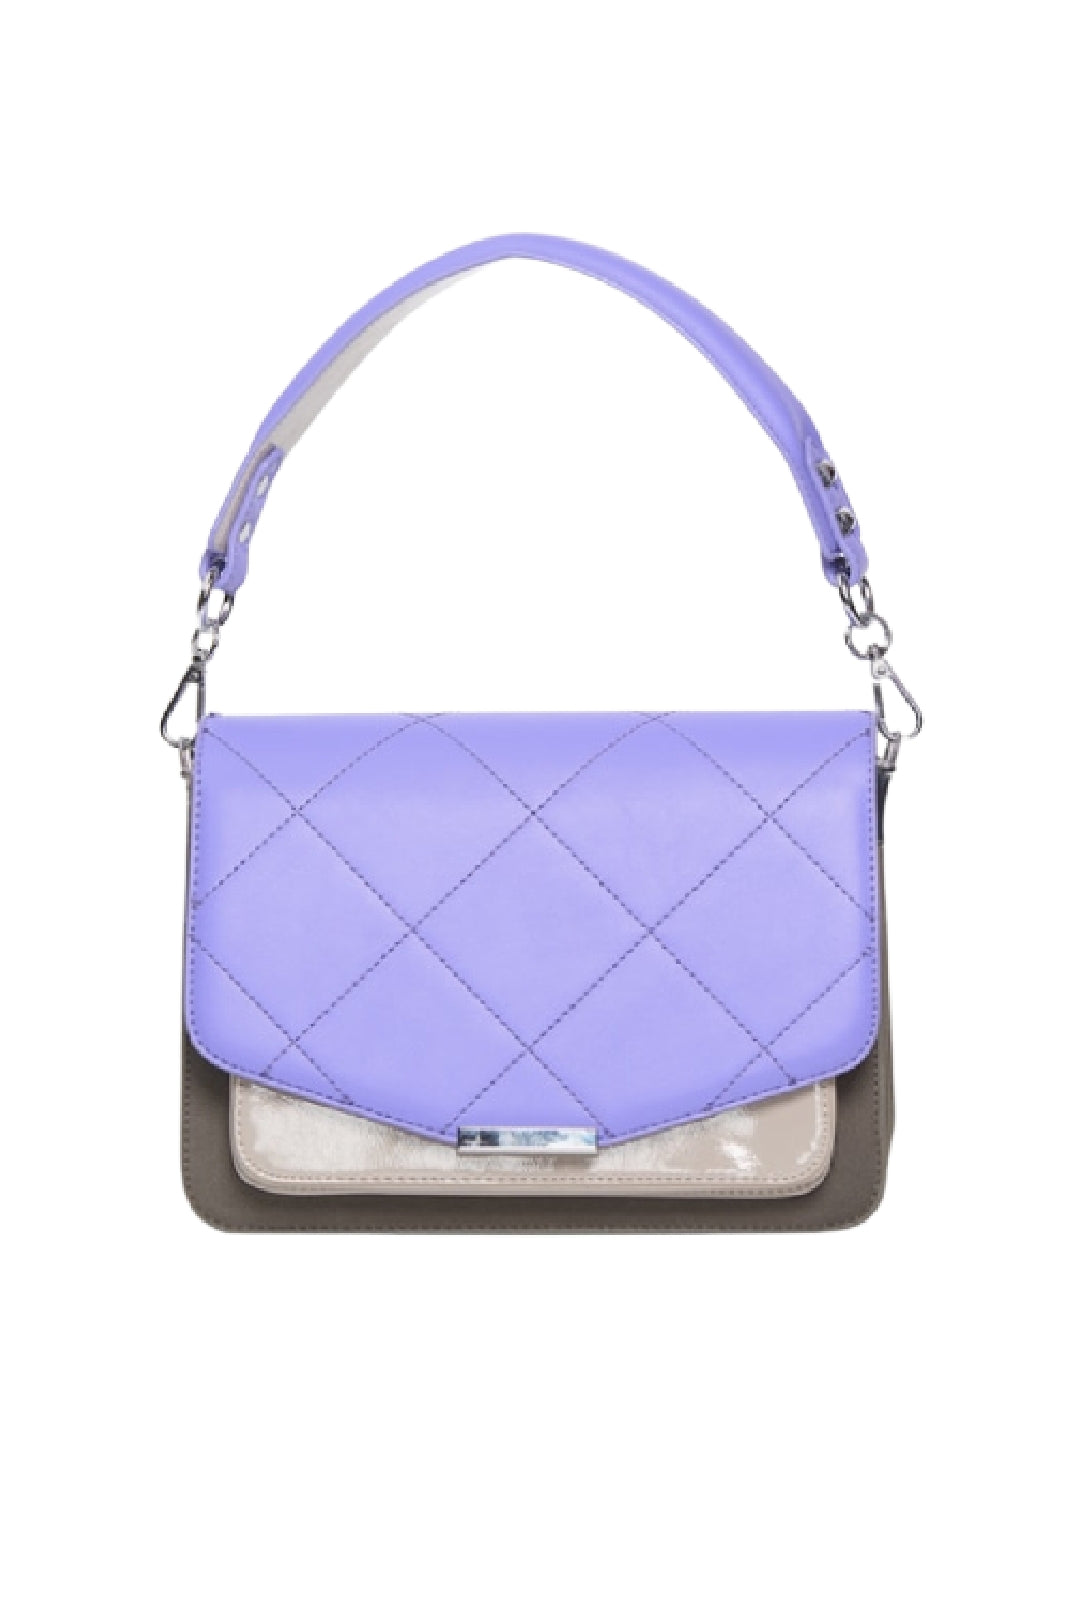 Noella - Blanca Bag Medium - Bright Purple/Grey Lak/Grey Tasker 